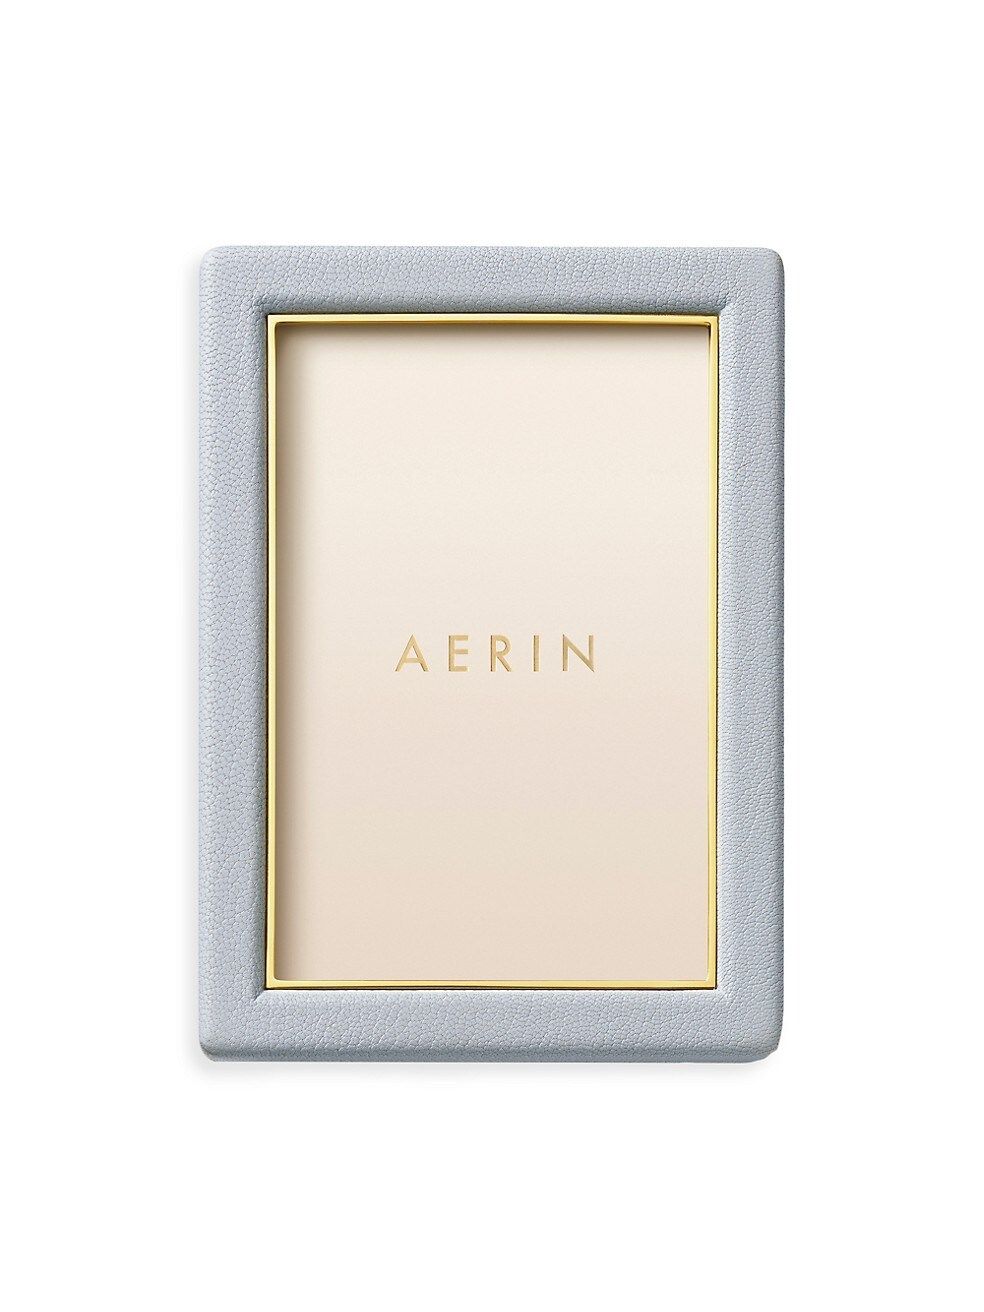 AERIN Piero Leather Frame | Saks Fifth Avenue